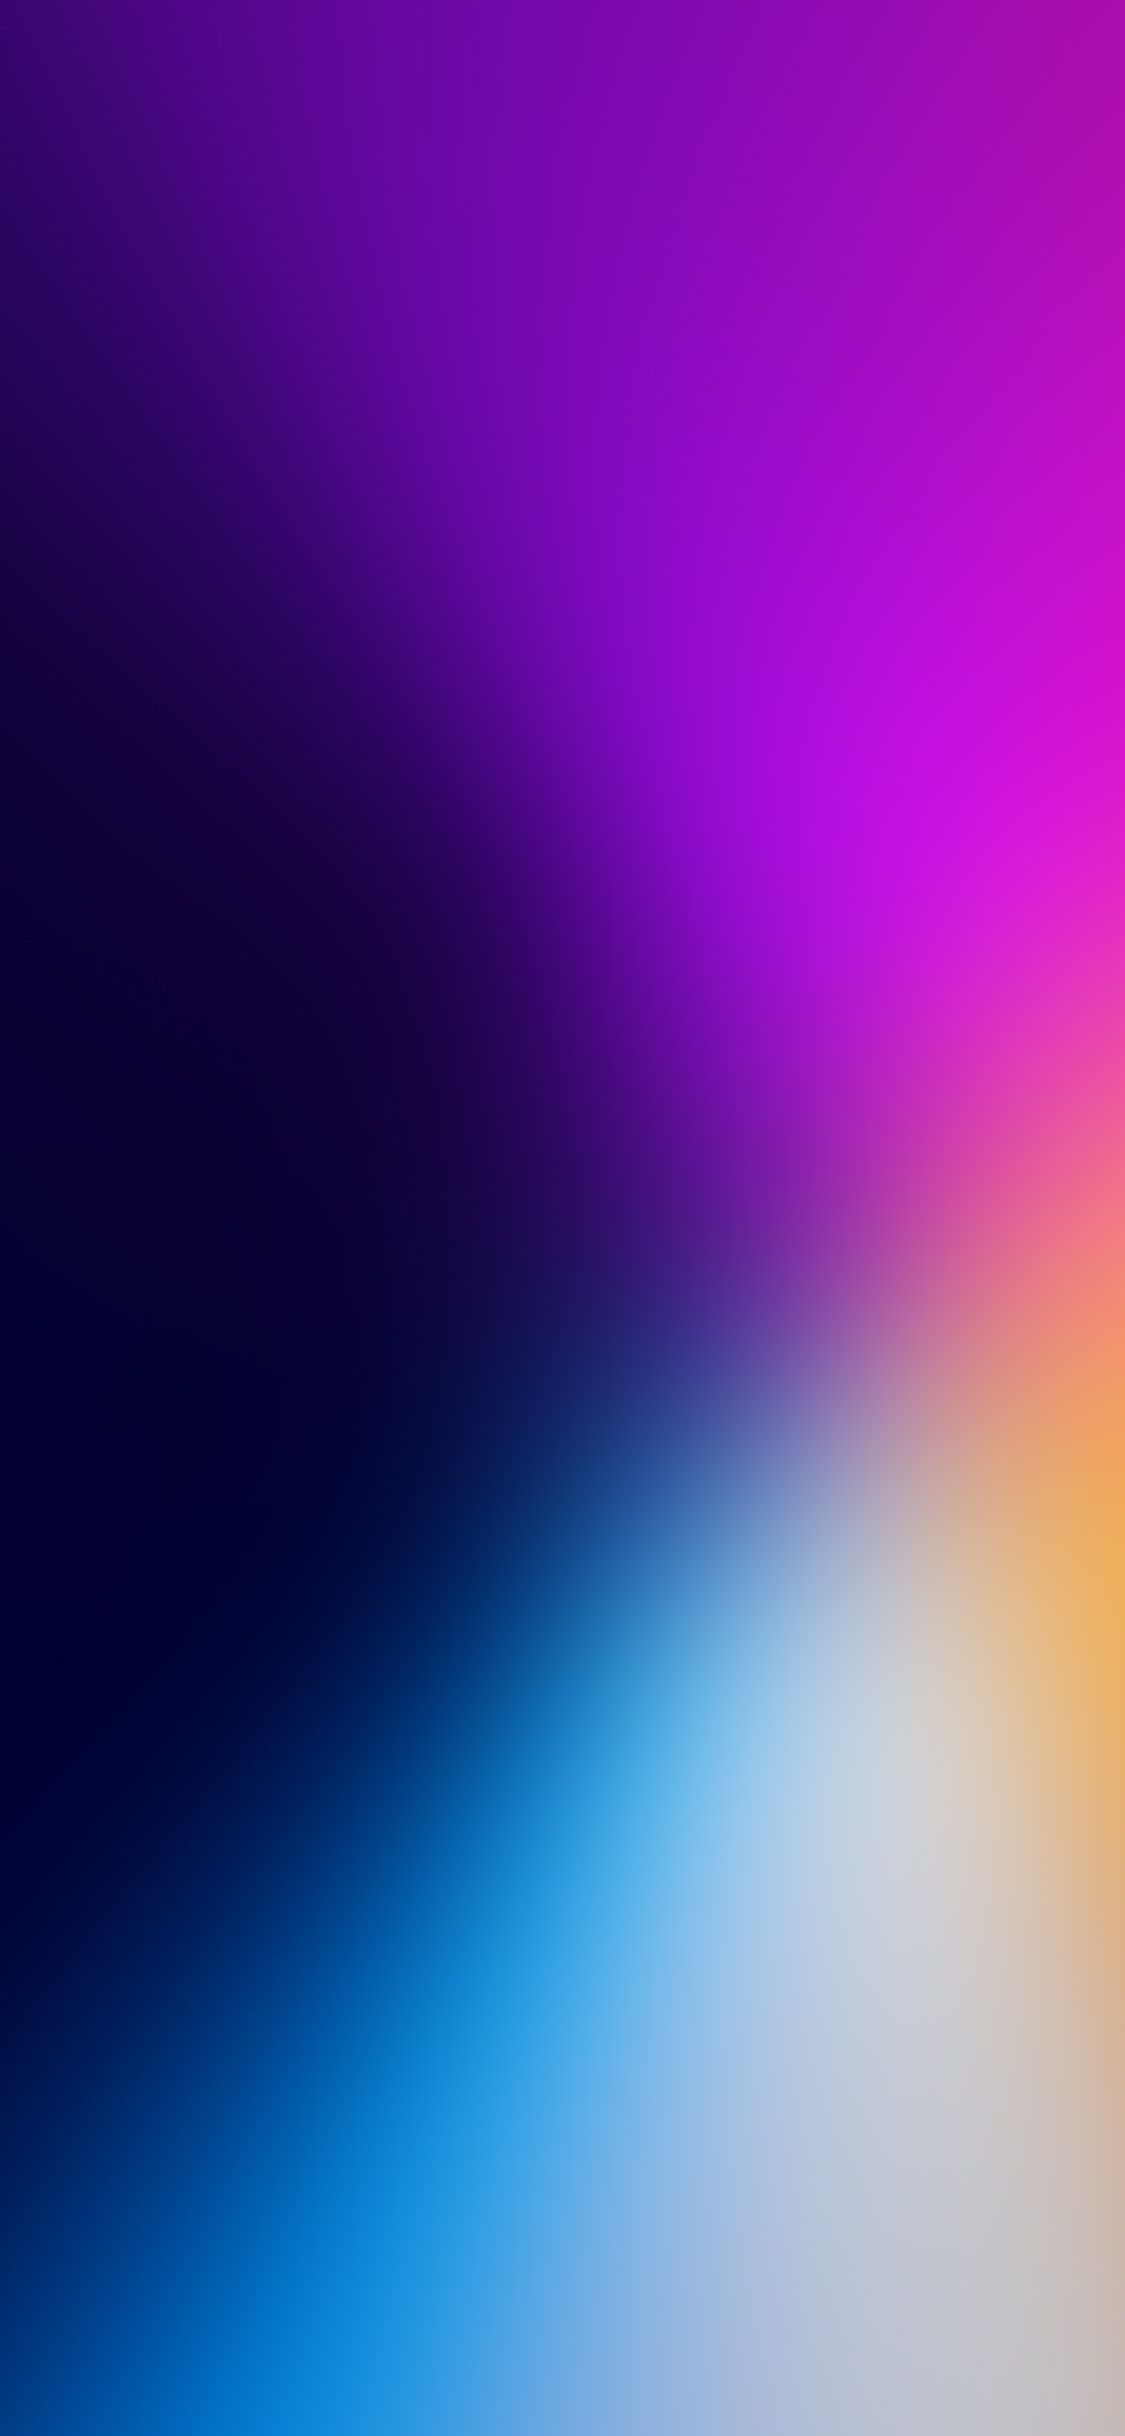 blur gradation apple event rainbow